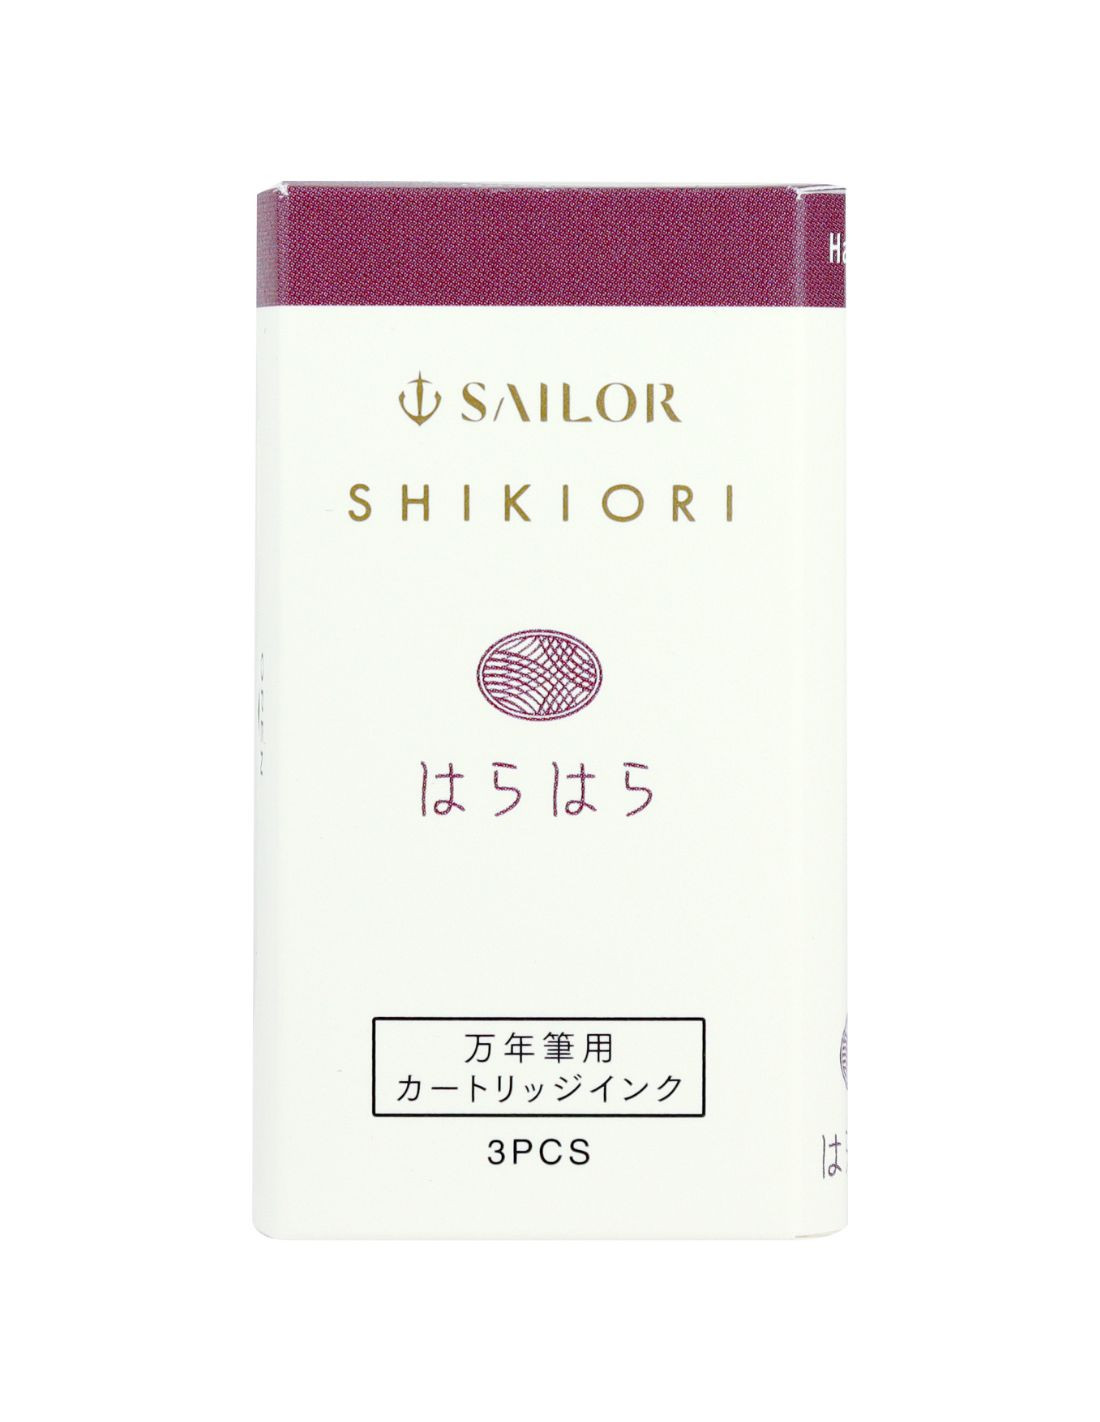 Shikiori The Sound of Rain Ink - Harahara (Drizzle) - 3 Cartridges - Sailor